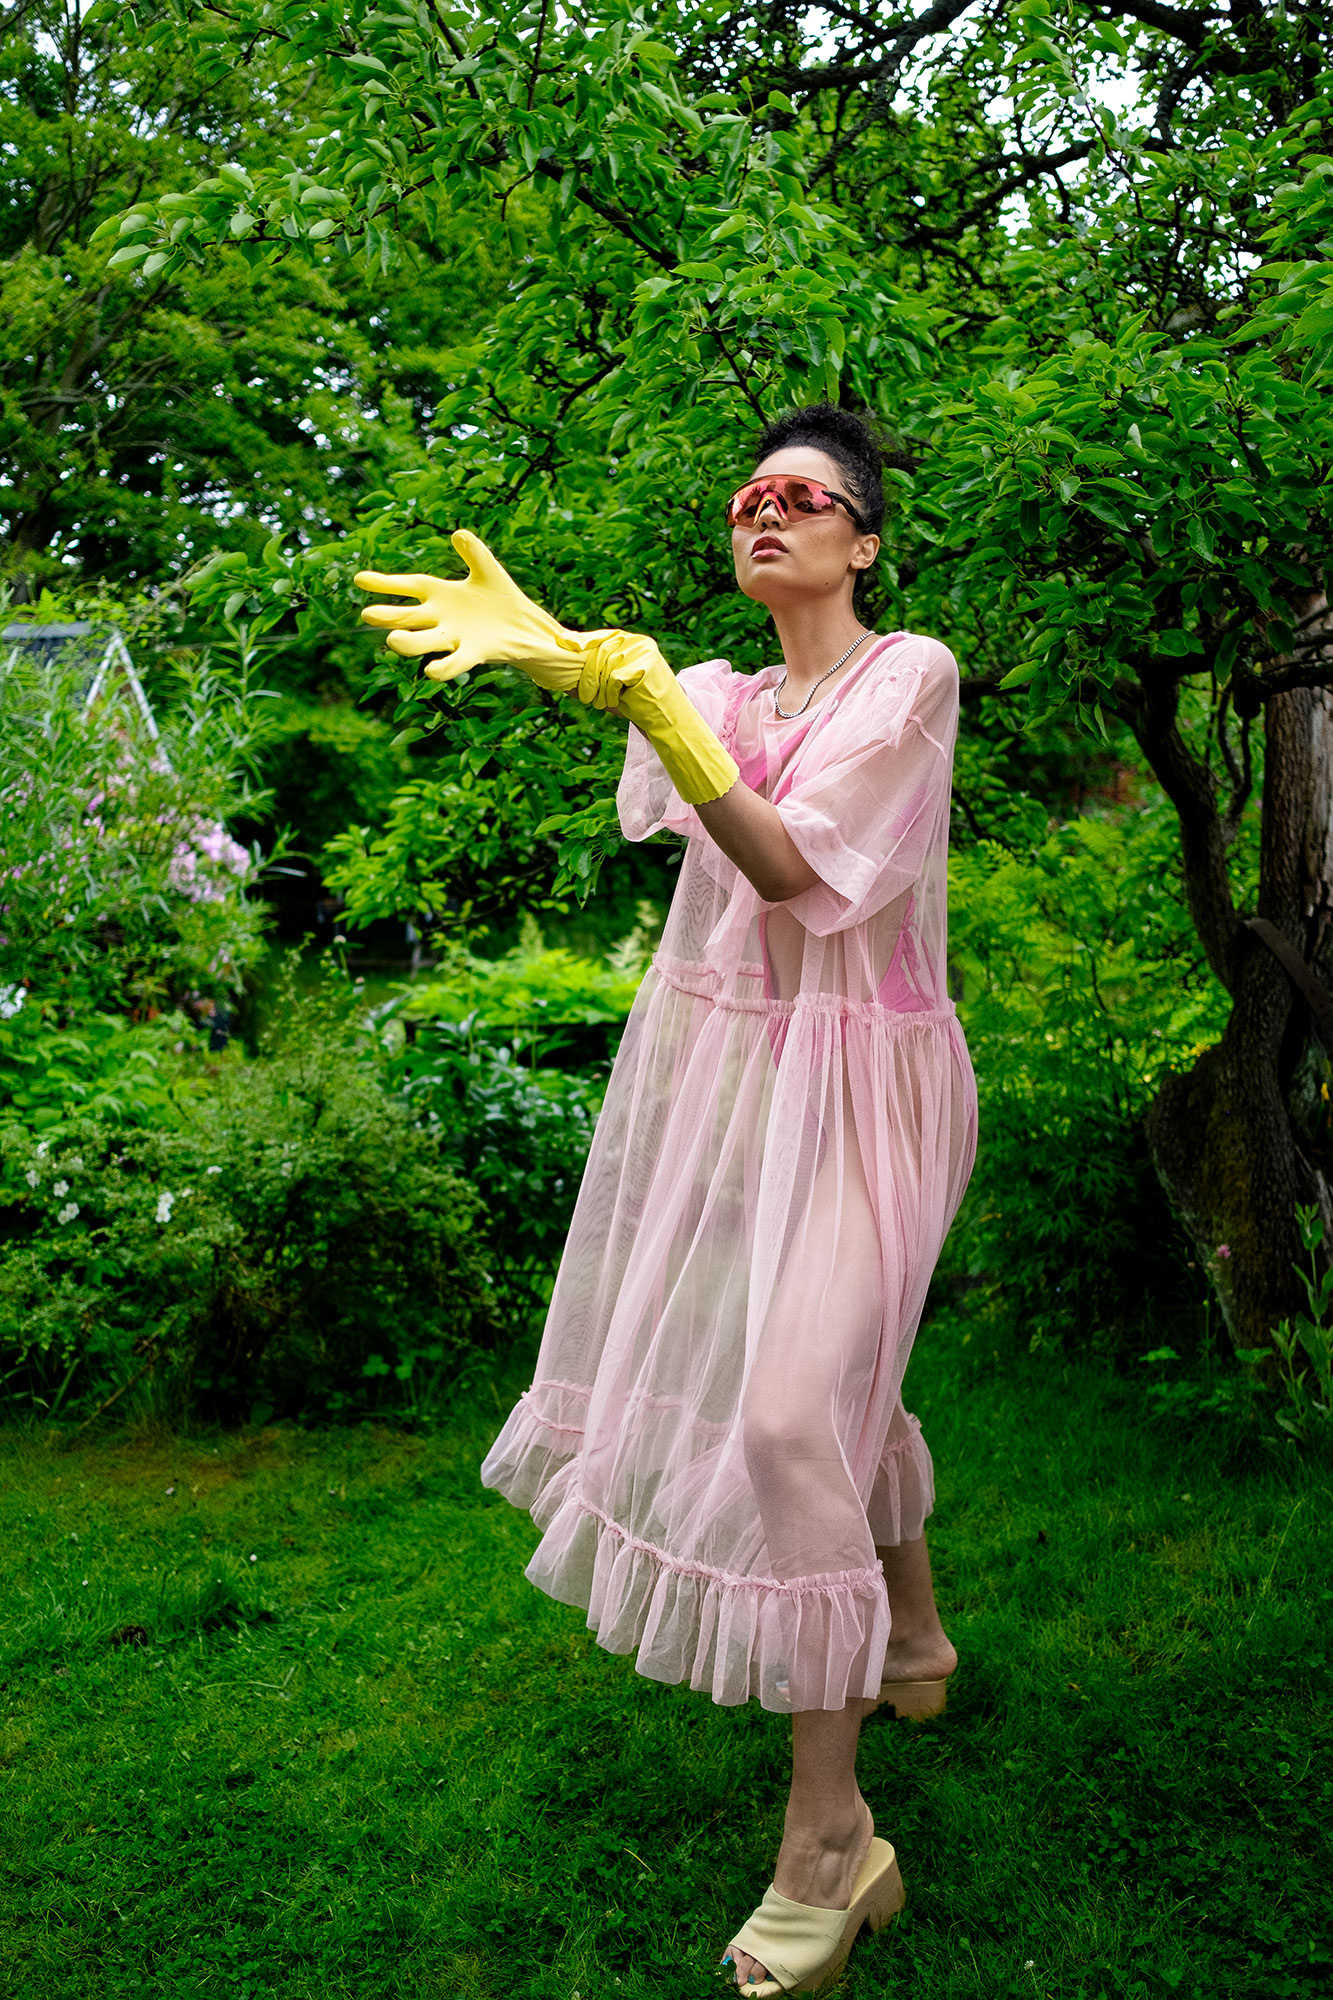 Krull magazine, Gardening Party fashion story, model in garden pink tulle dress over fuschia swimsuit